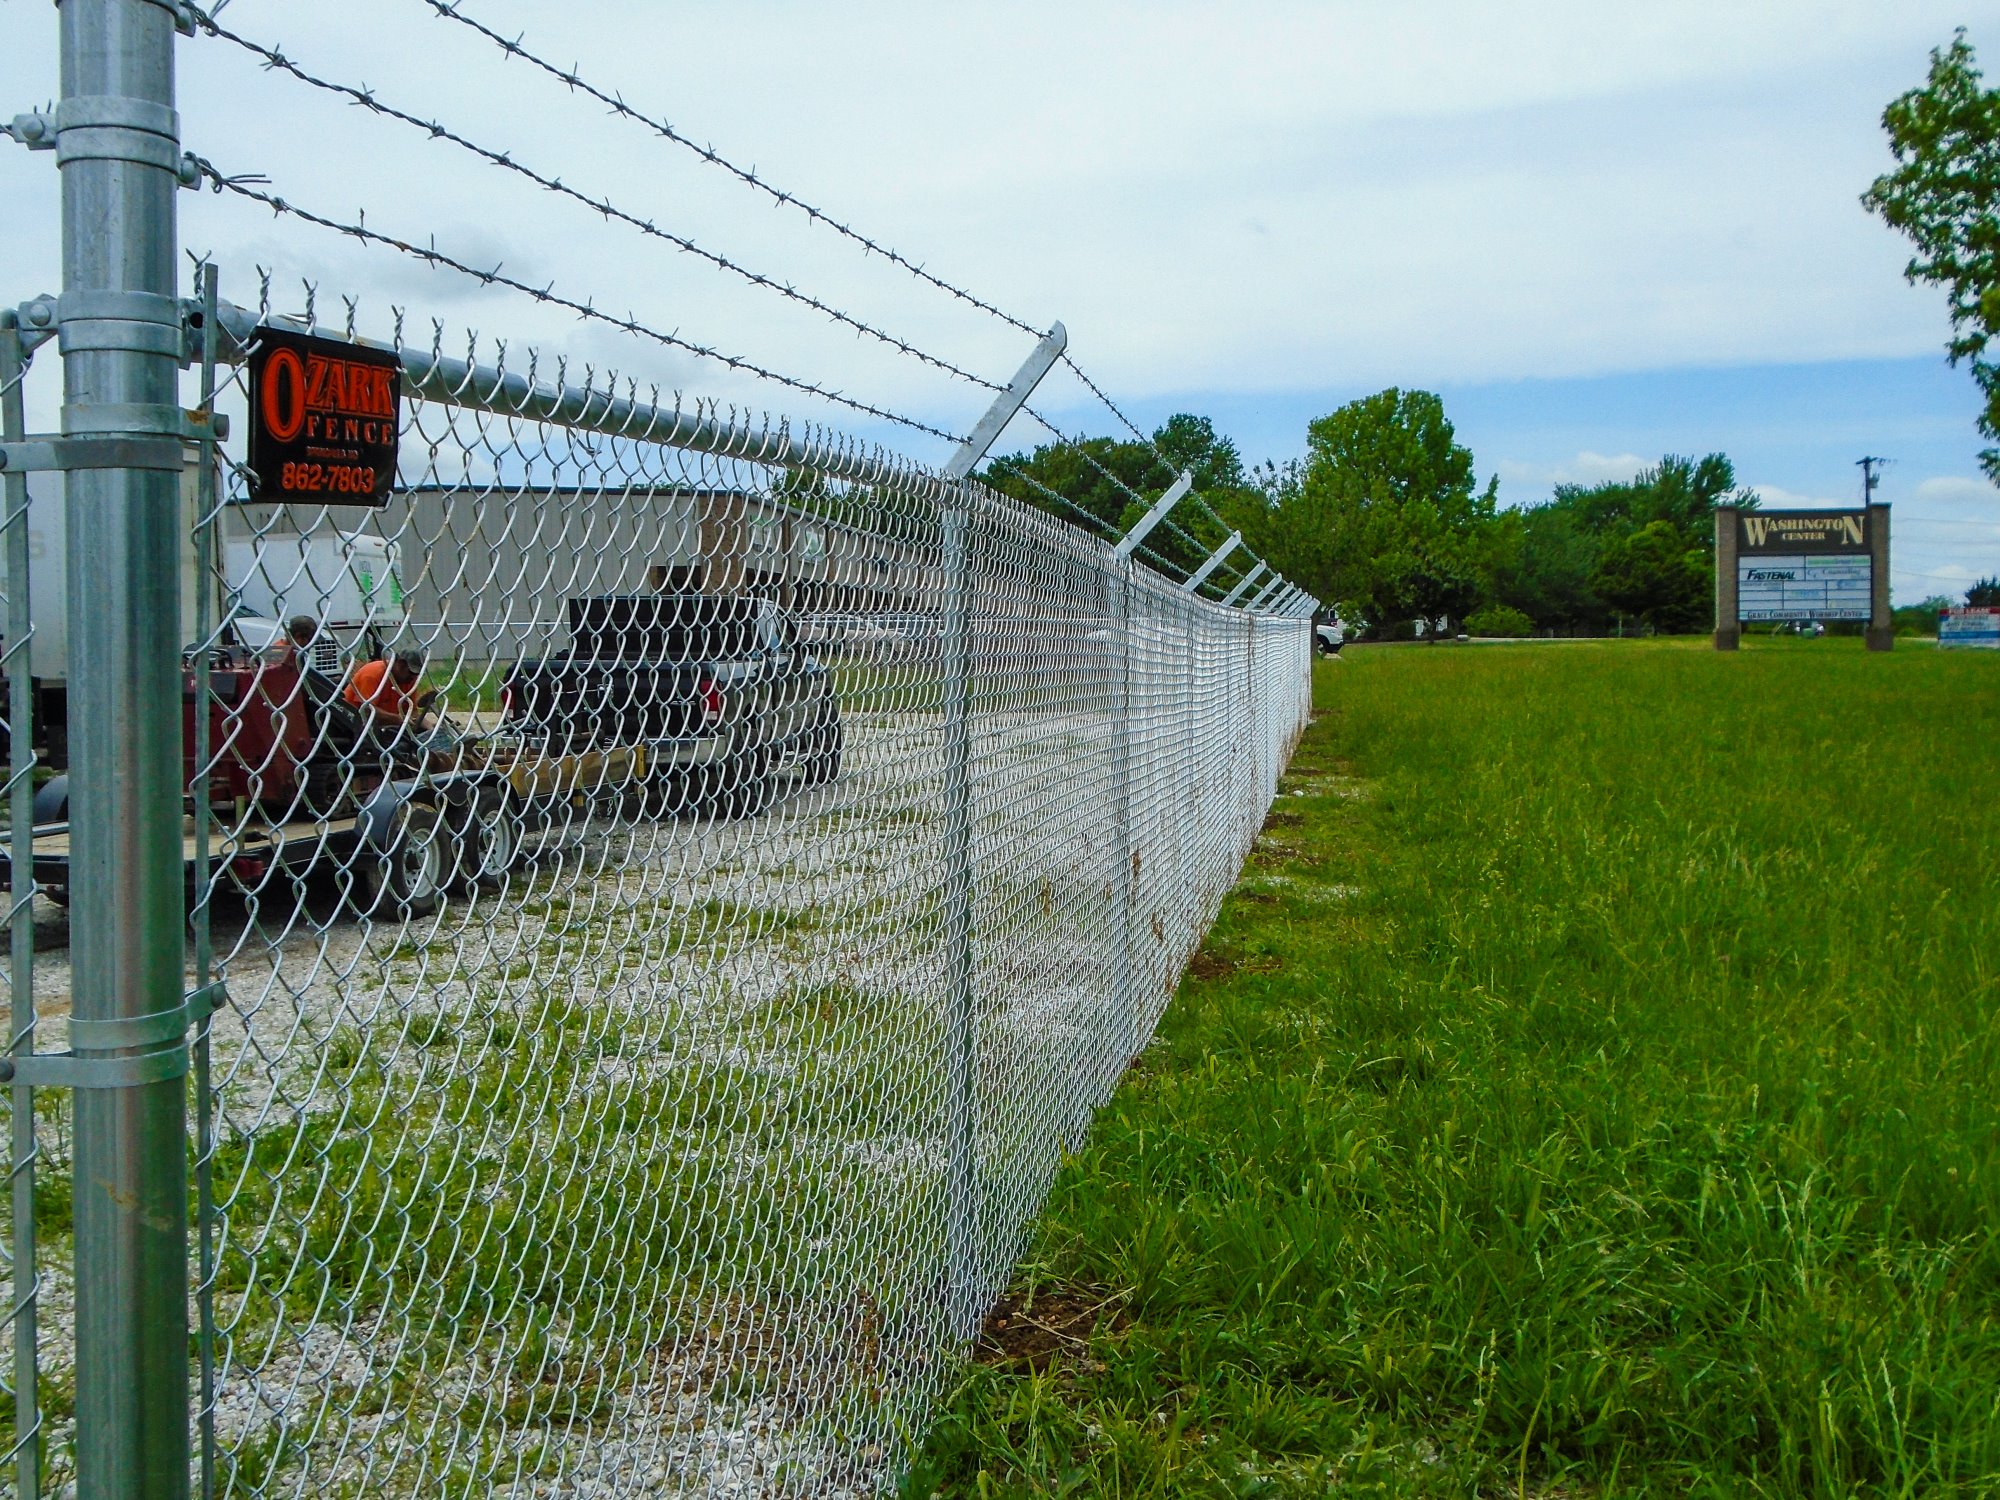 Billings Missouri commercial fencing contractor